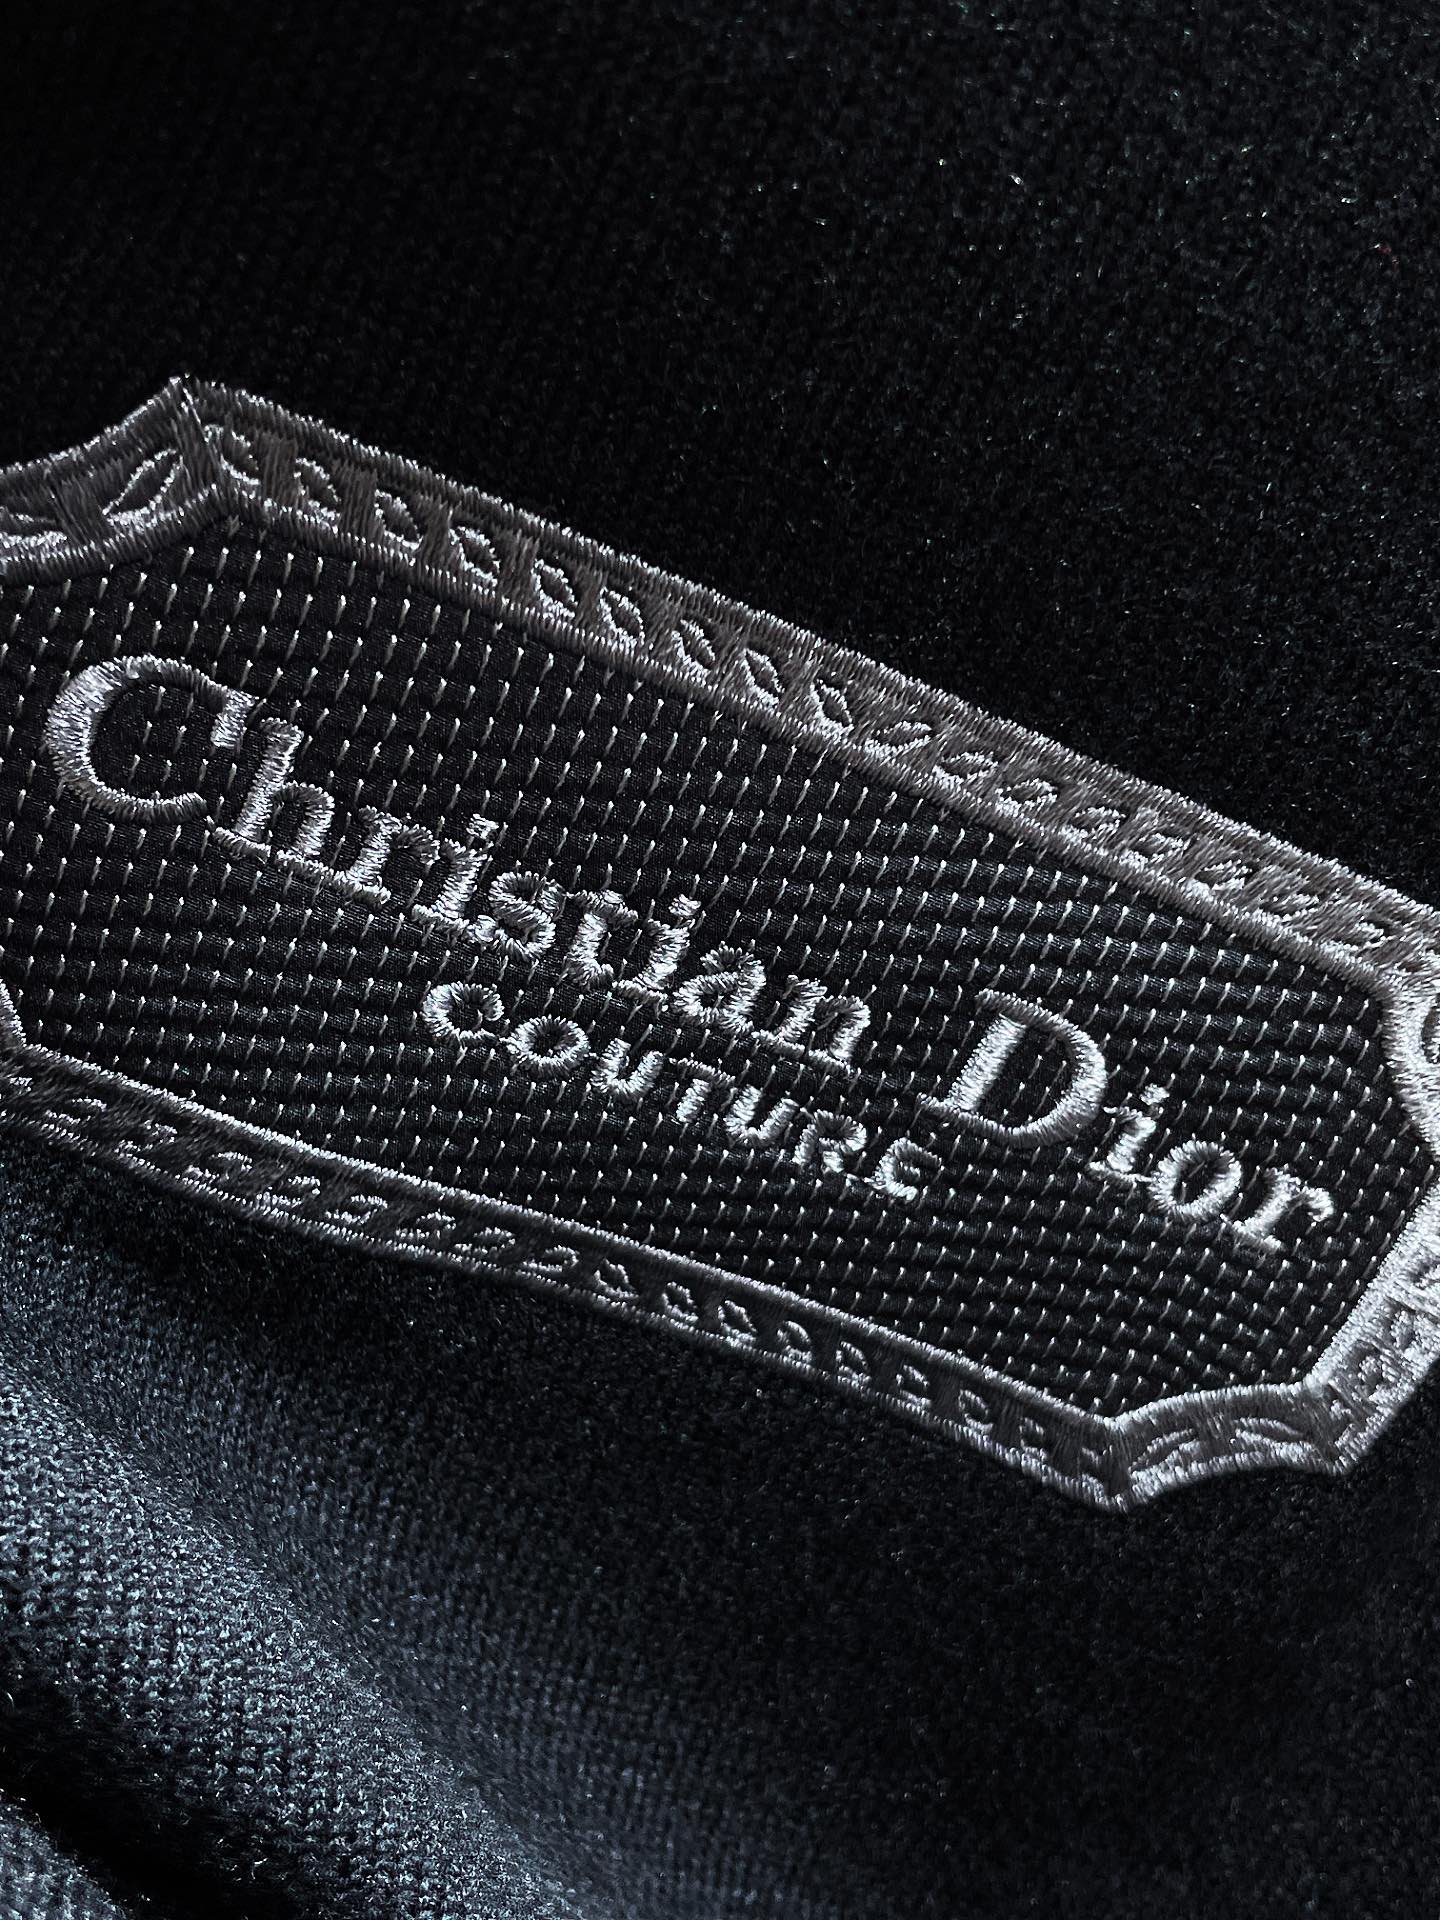 dior ディオールトップス偽物 ファッション 秋冬服 メンズ 新品 シンプル 高級品 ブラック_8